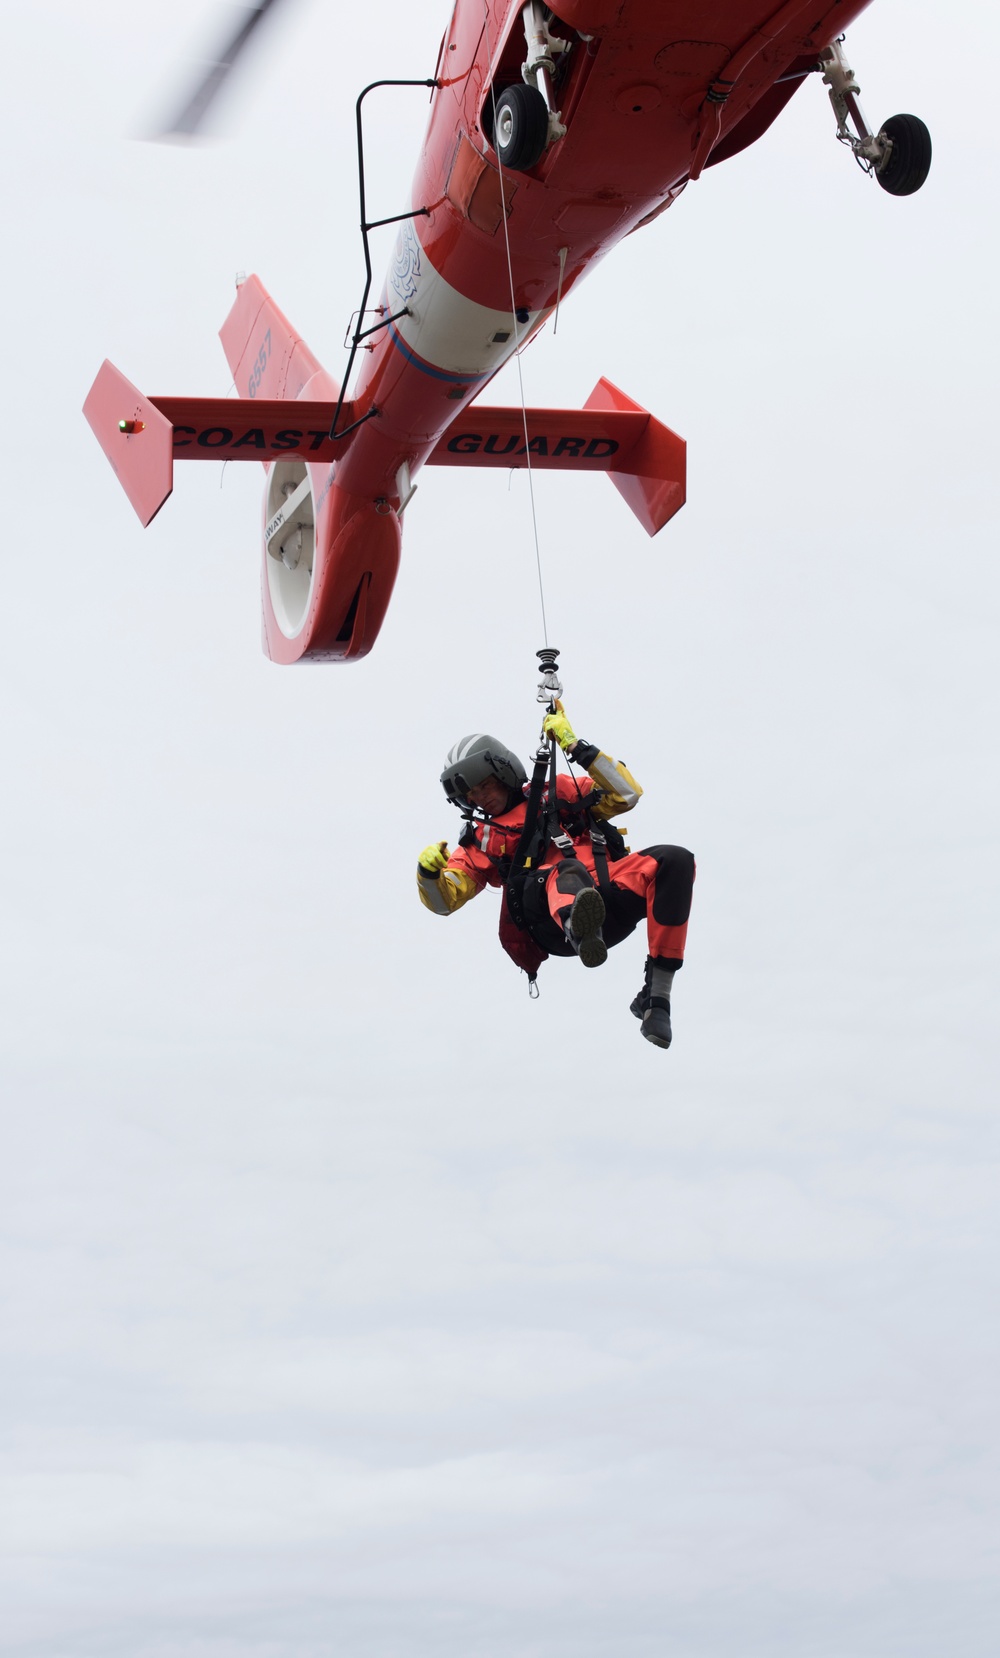 Coast Guard FOB Mugu conducts cliff rescue training